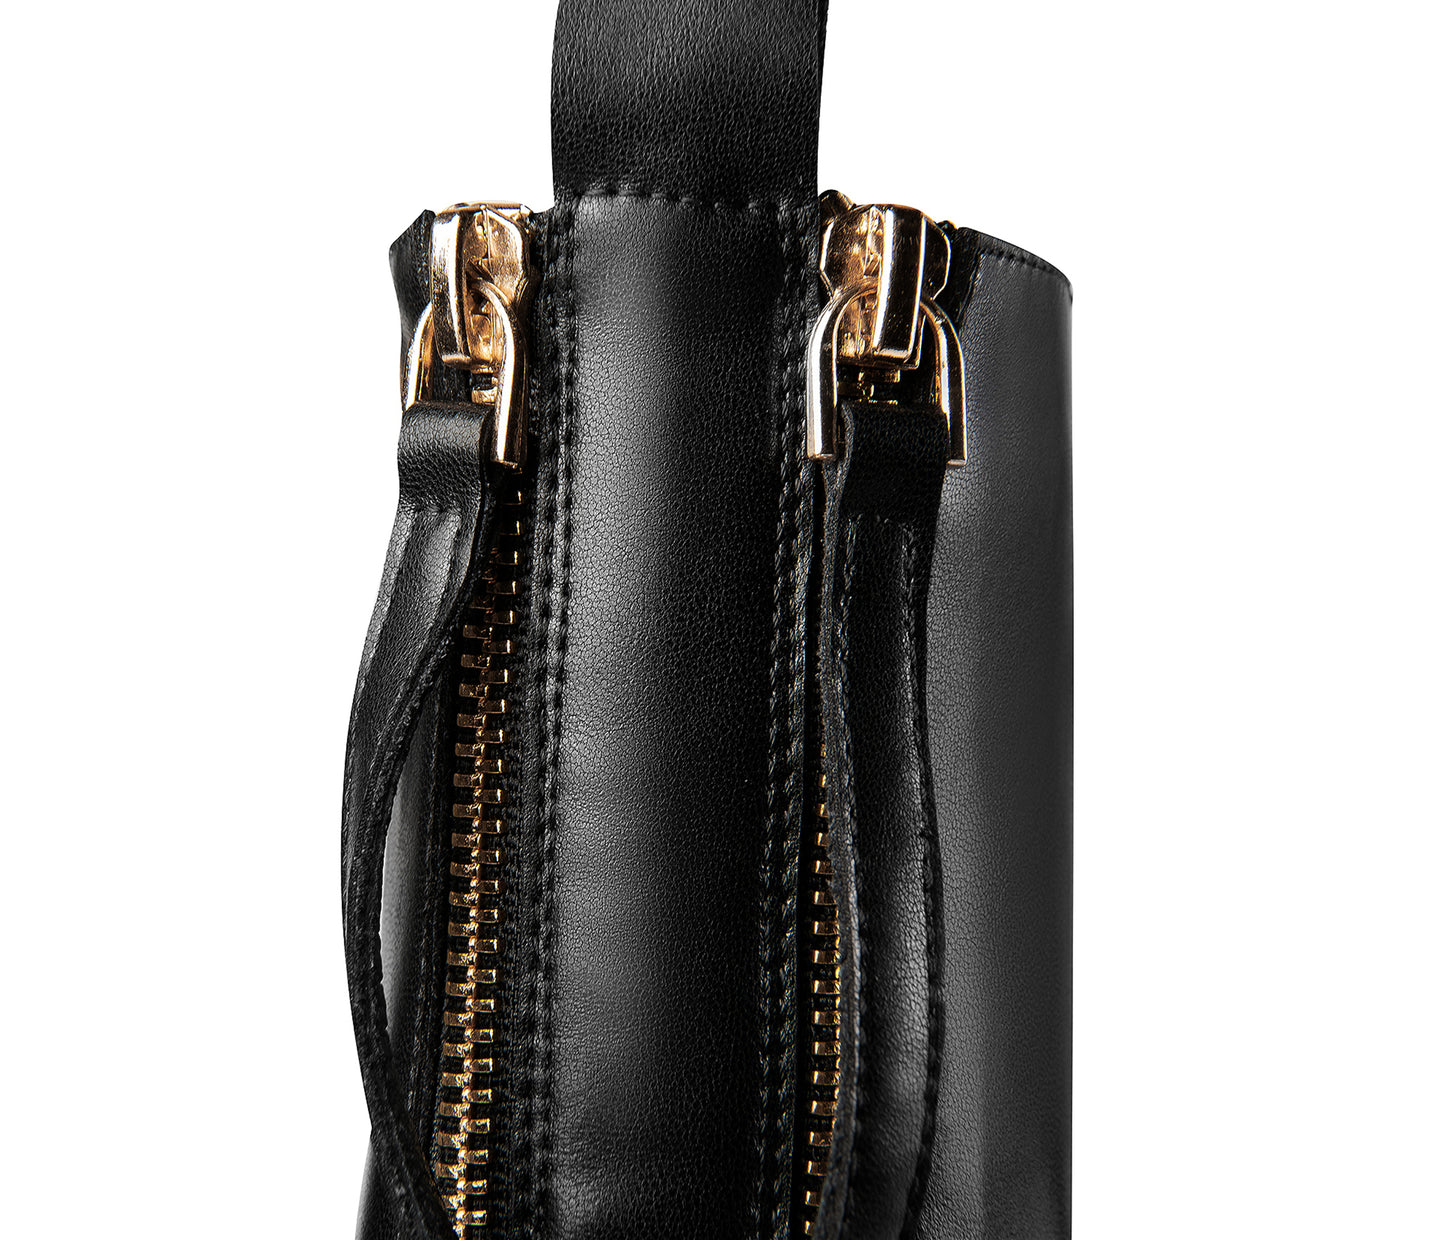 TinaCus Women's Handmade Genuine Leather Graceful Heel Stylish Double Back Zip Ankle Booties